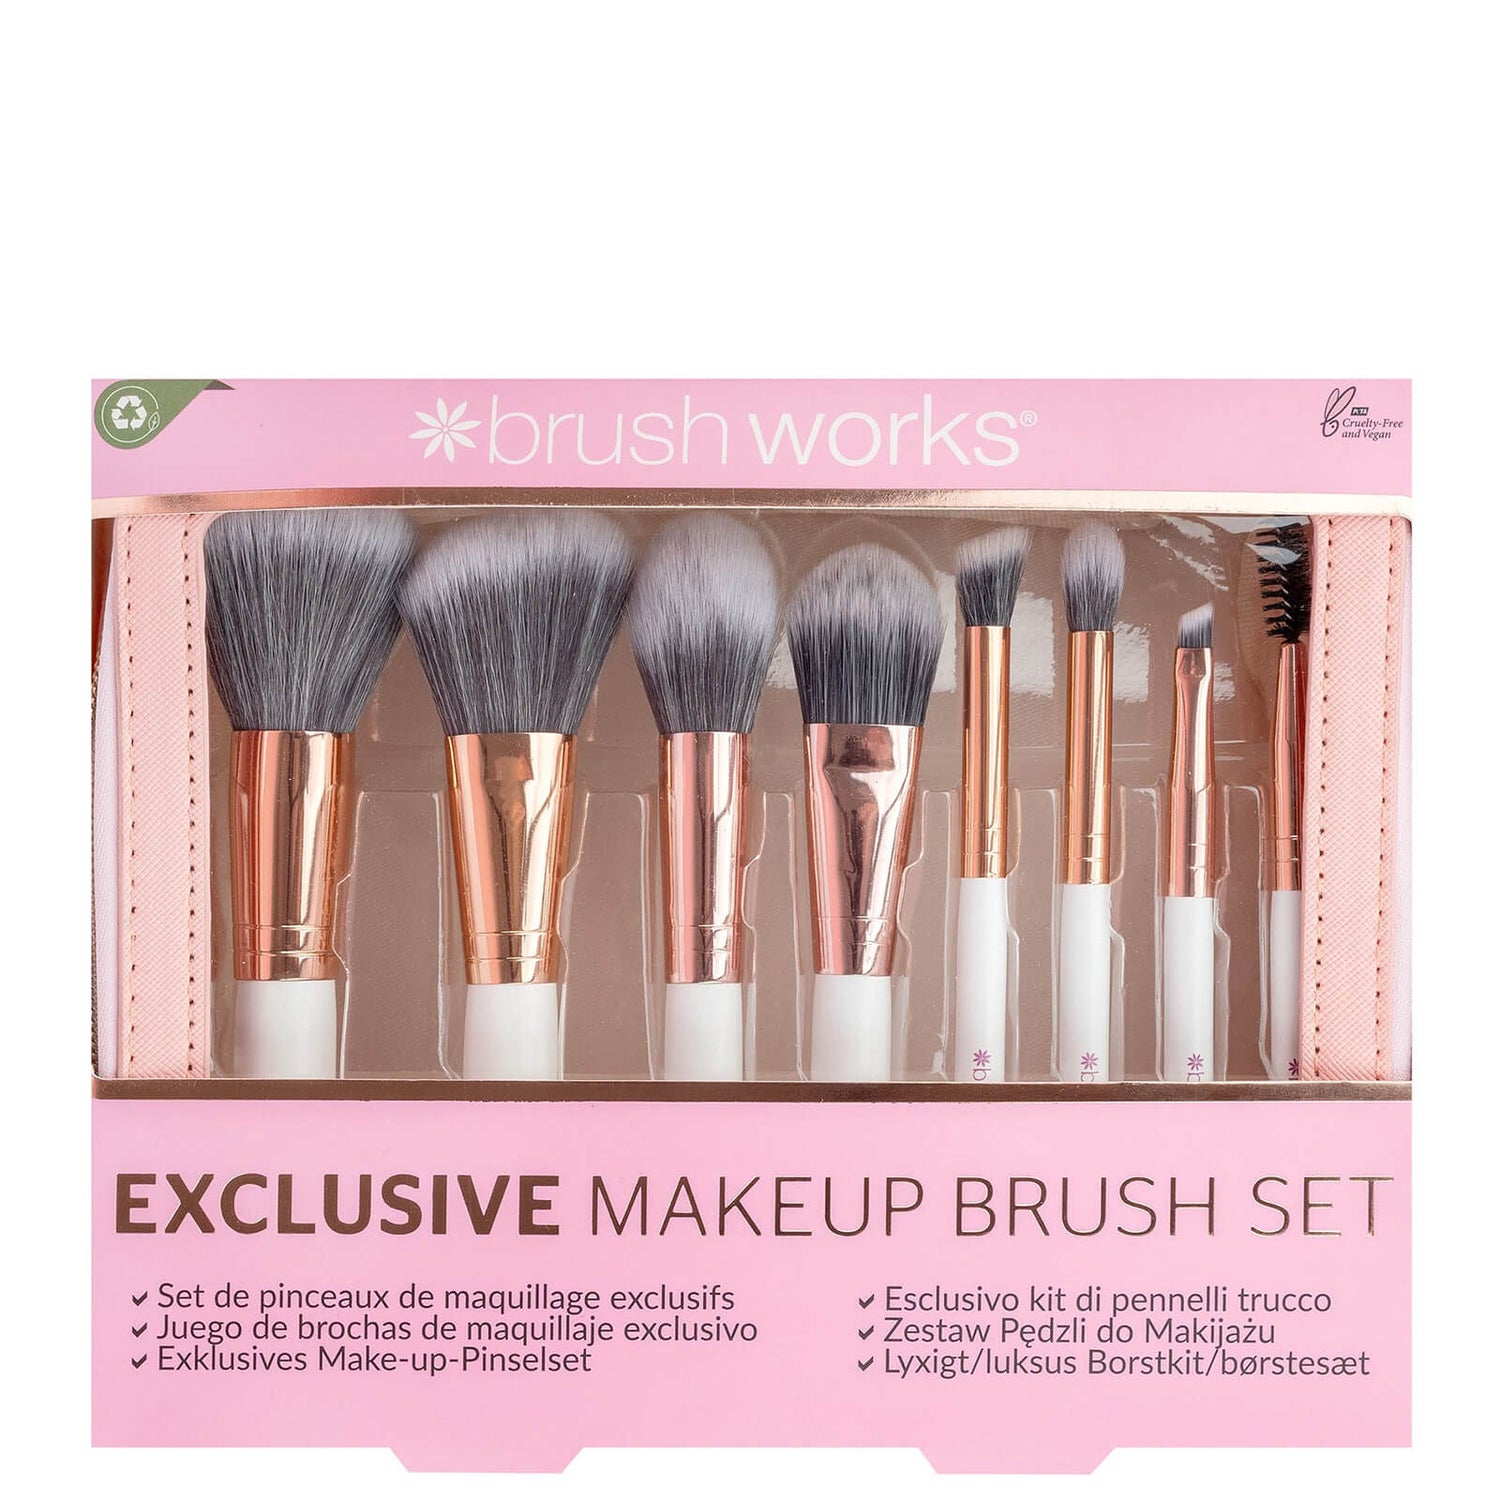 brushworks Exclusive Makeup Brush Set